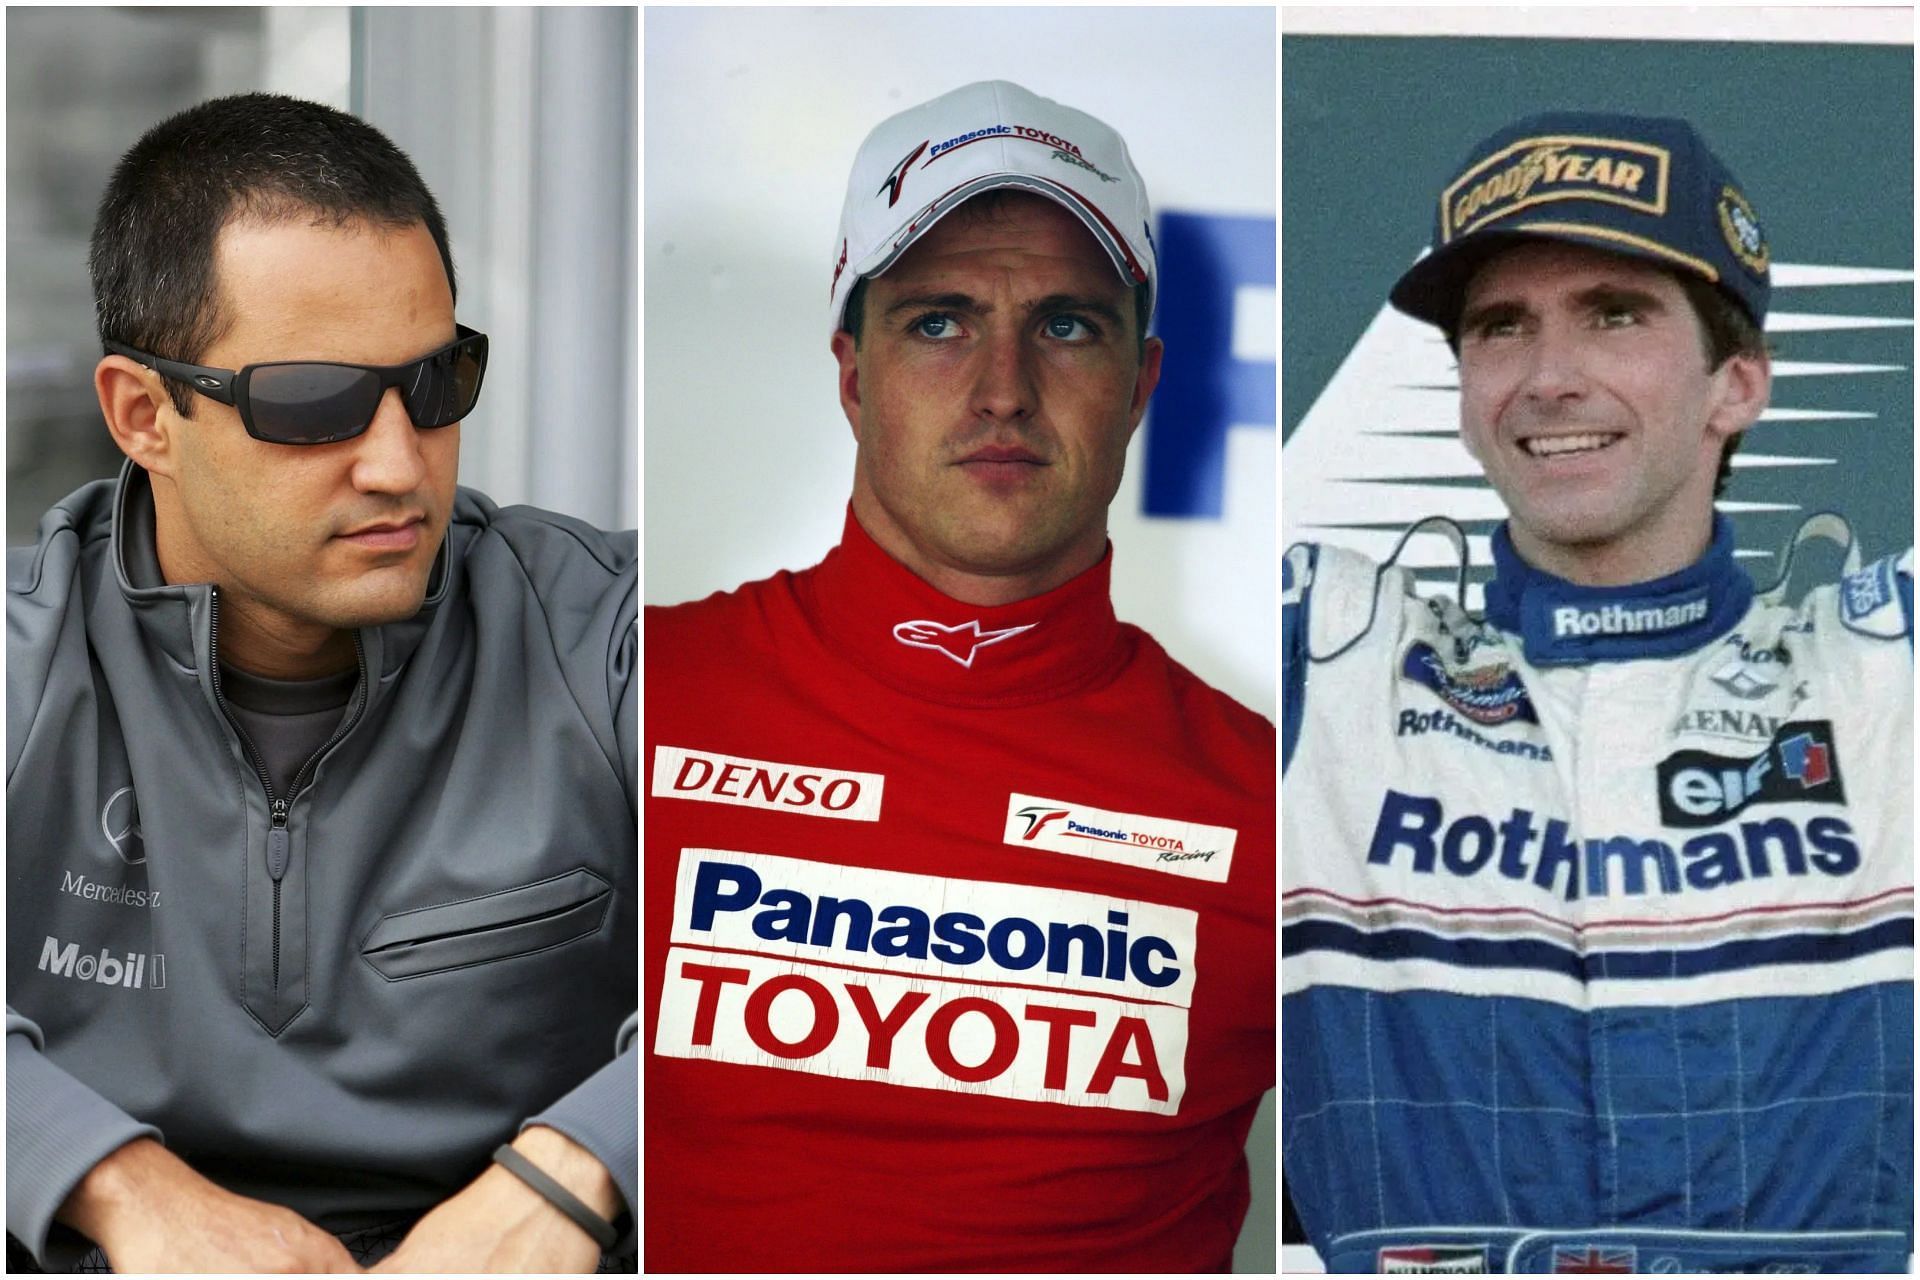 Juan-Pablo Montoya (L), Ralf Schumacher (C), Damon Hill (R) (Collage via Sportskeeda)